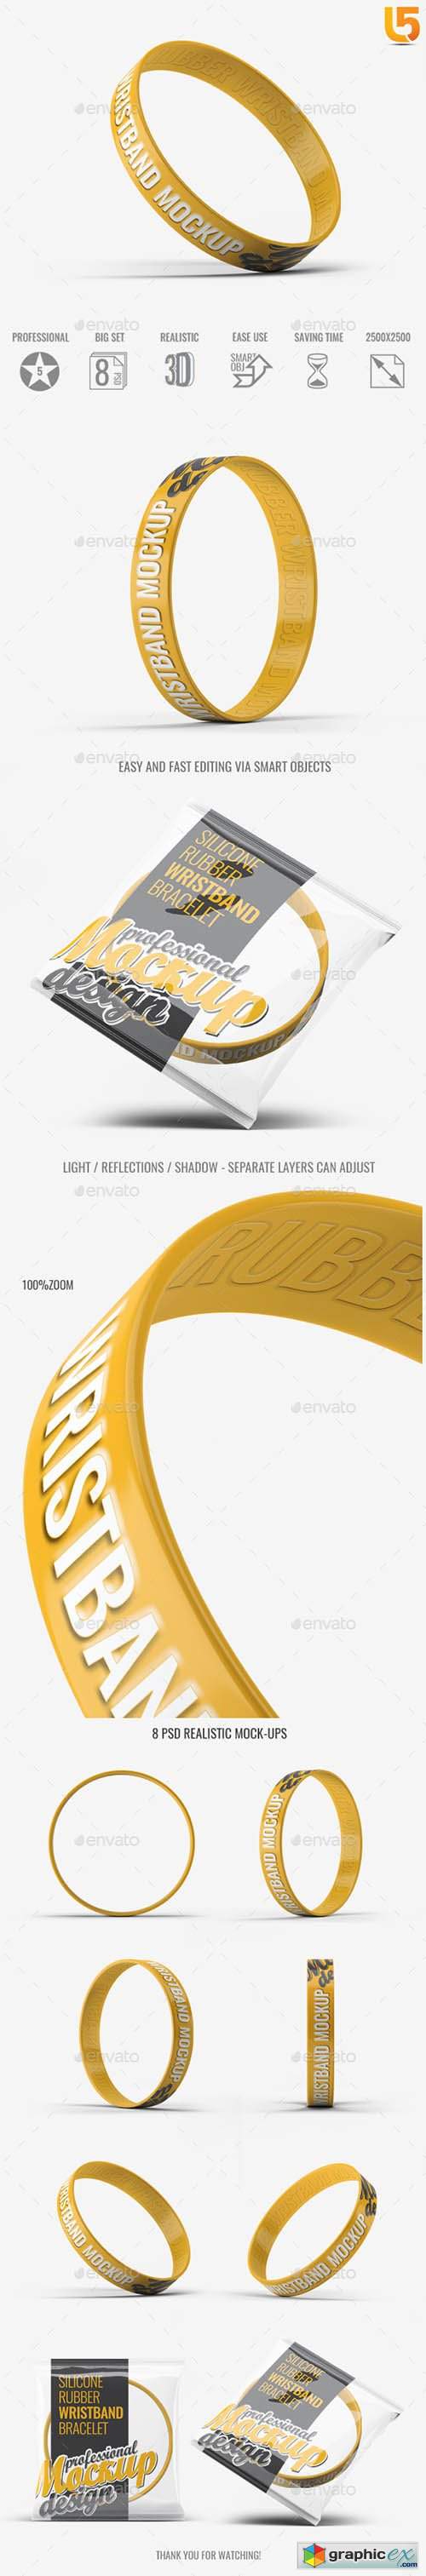 Silicone Rubber Wristband Bracelet Mock-Up